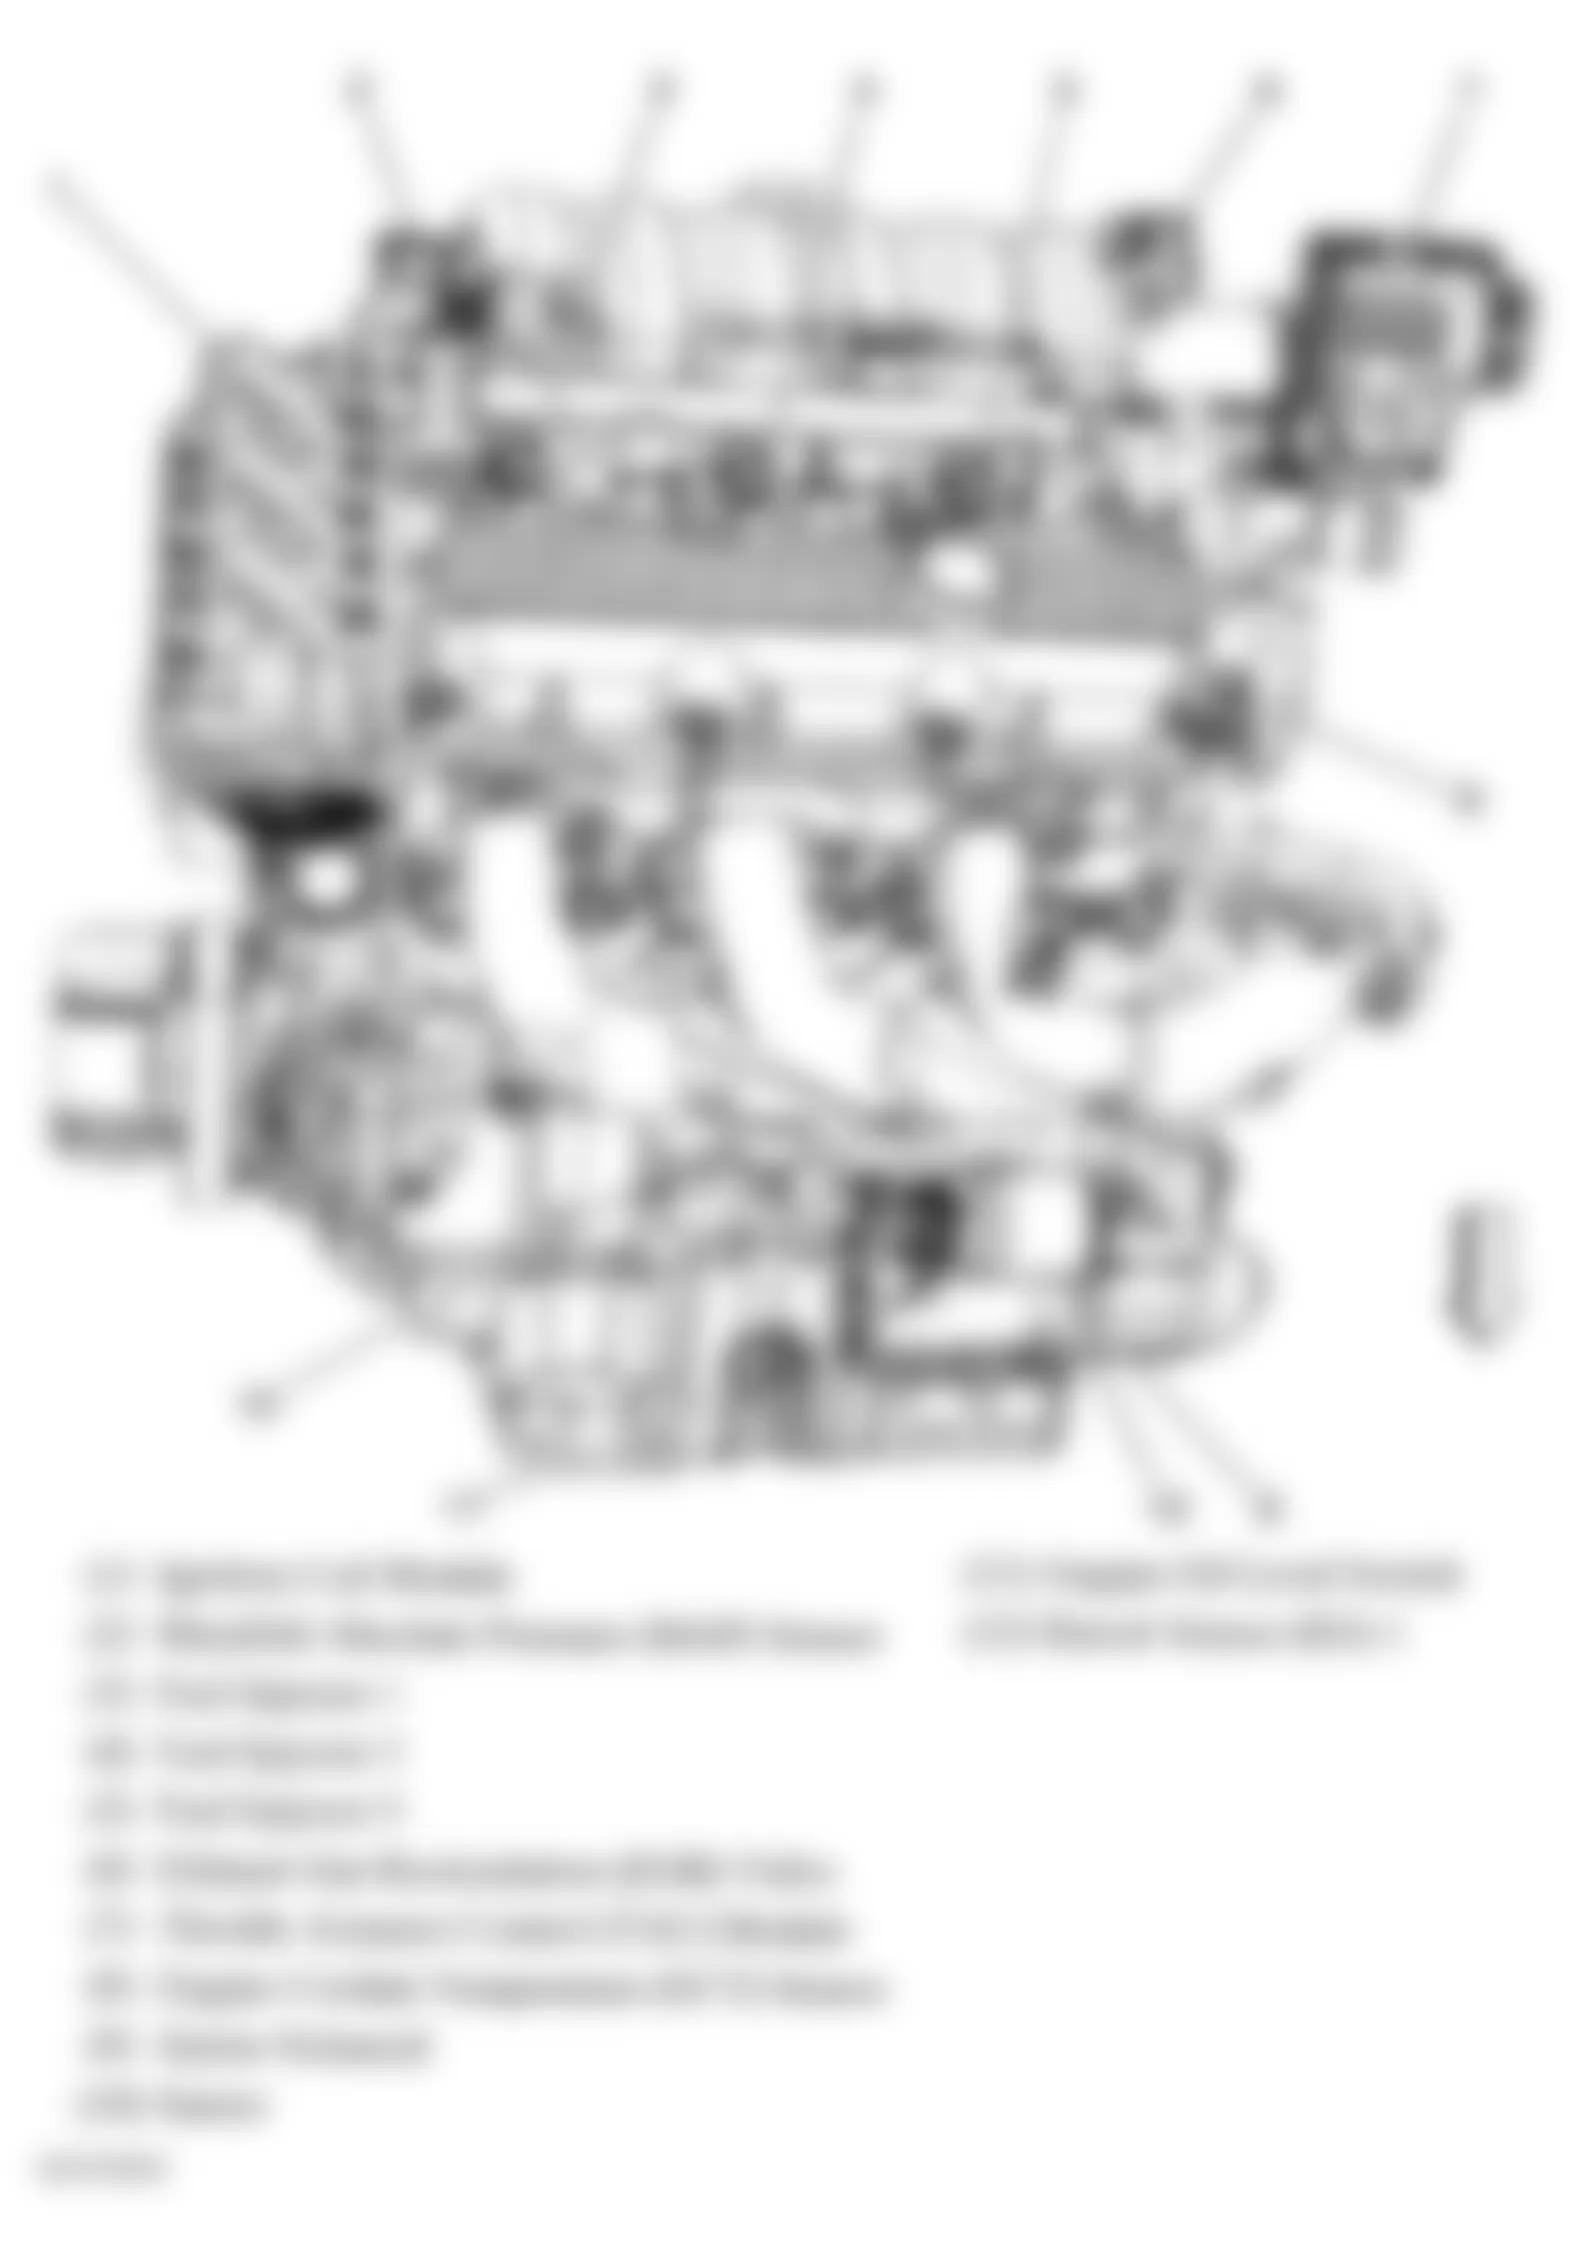 Buick Lucerne CXL 2006 - Component Locations -  Left Side Of Engine (3.8L)